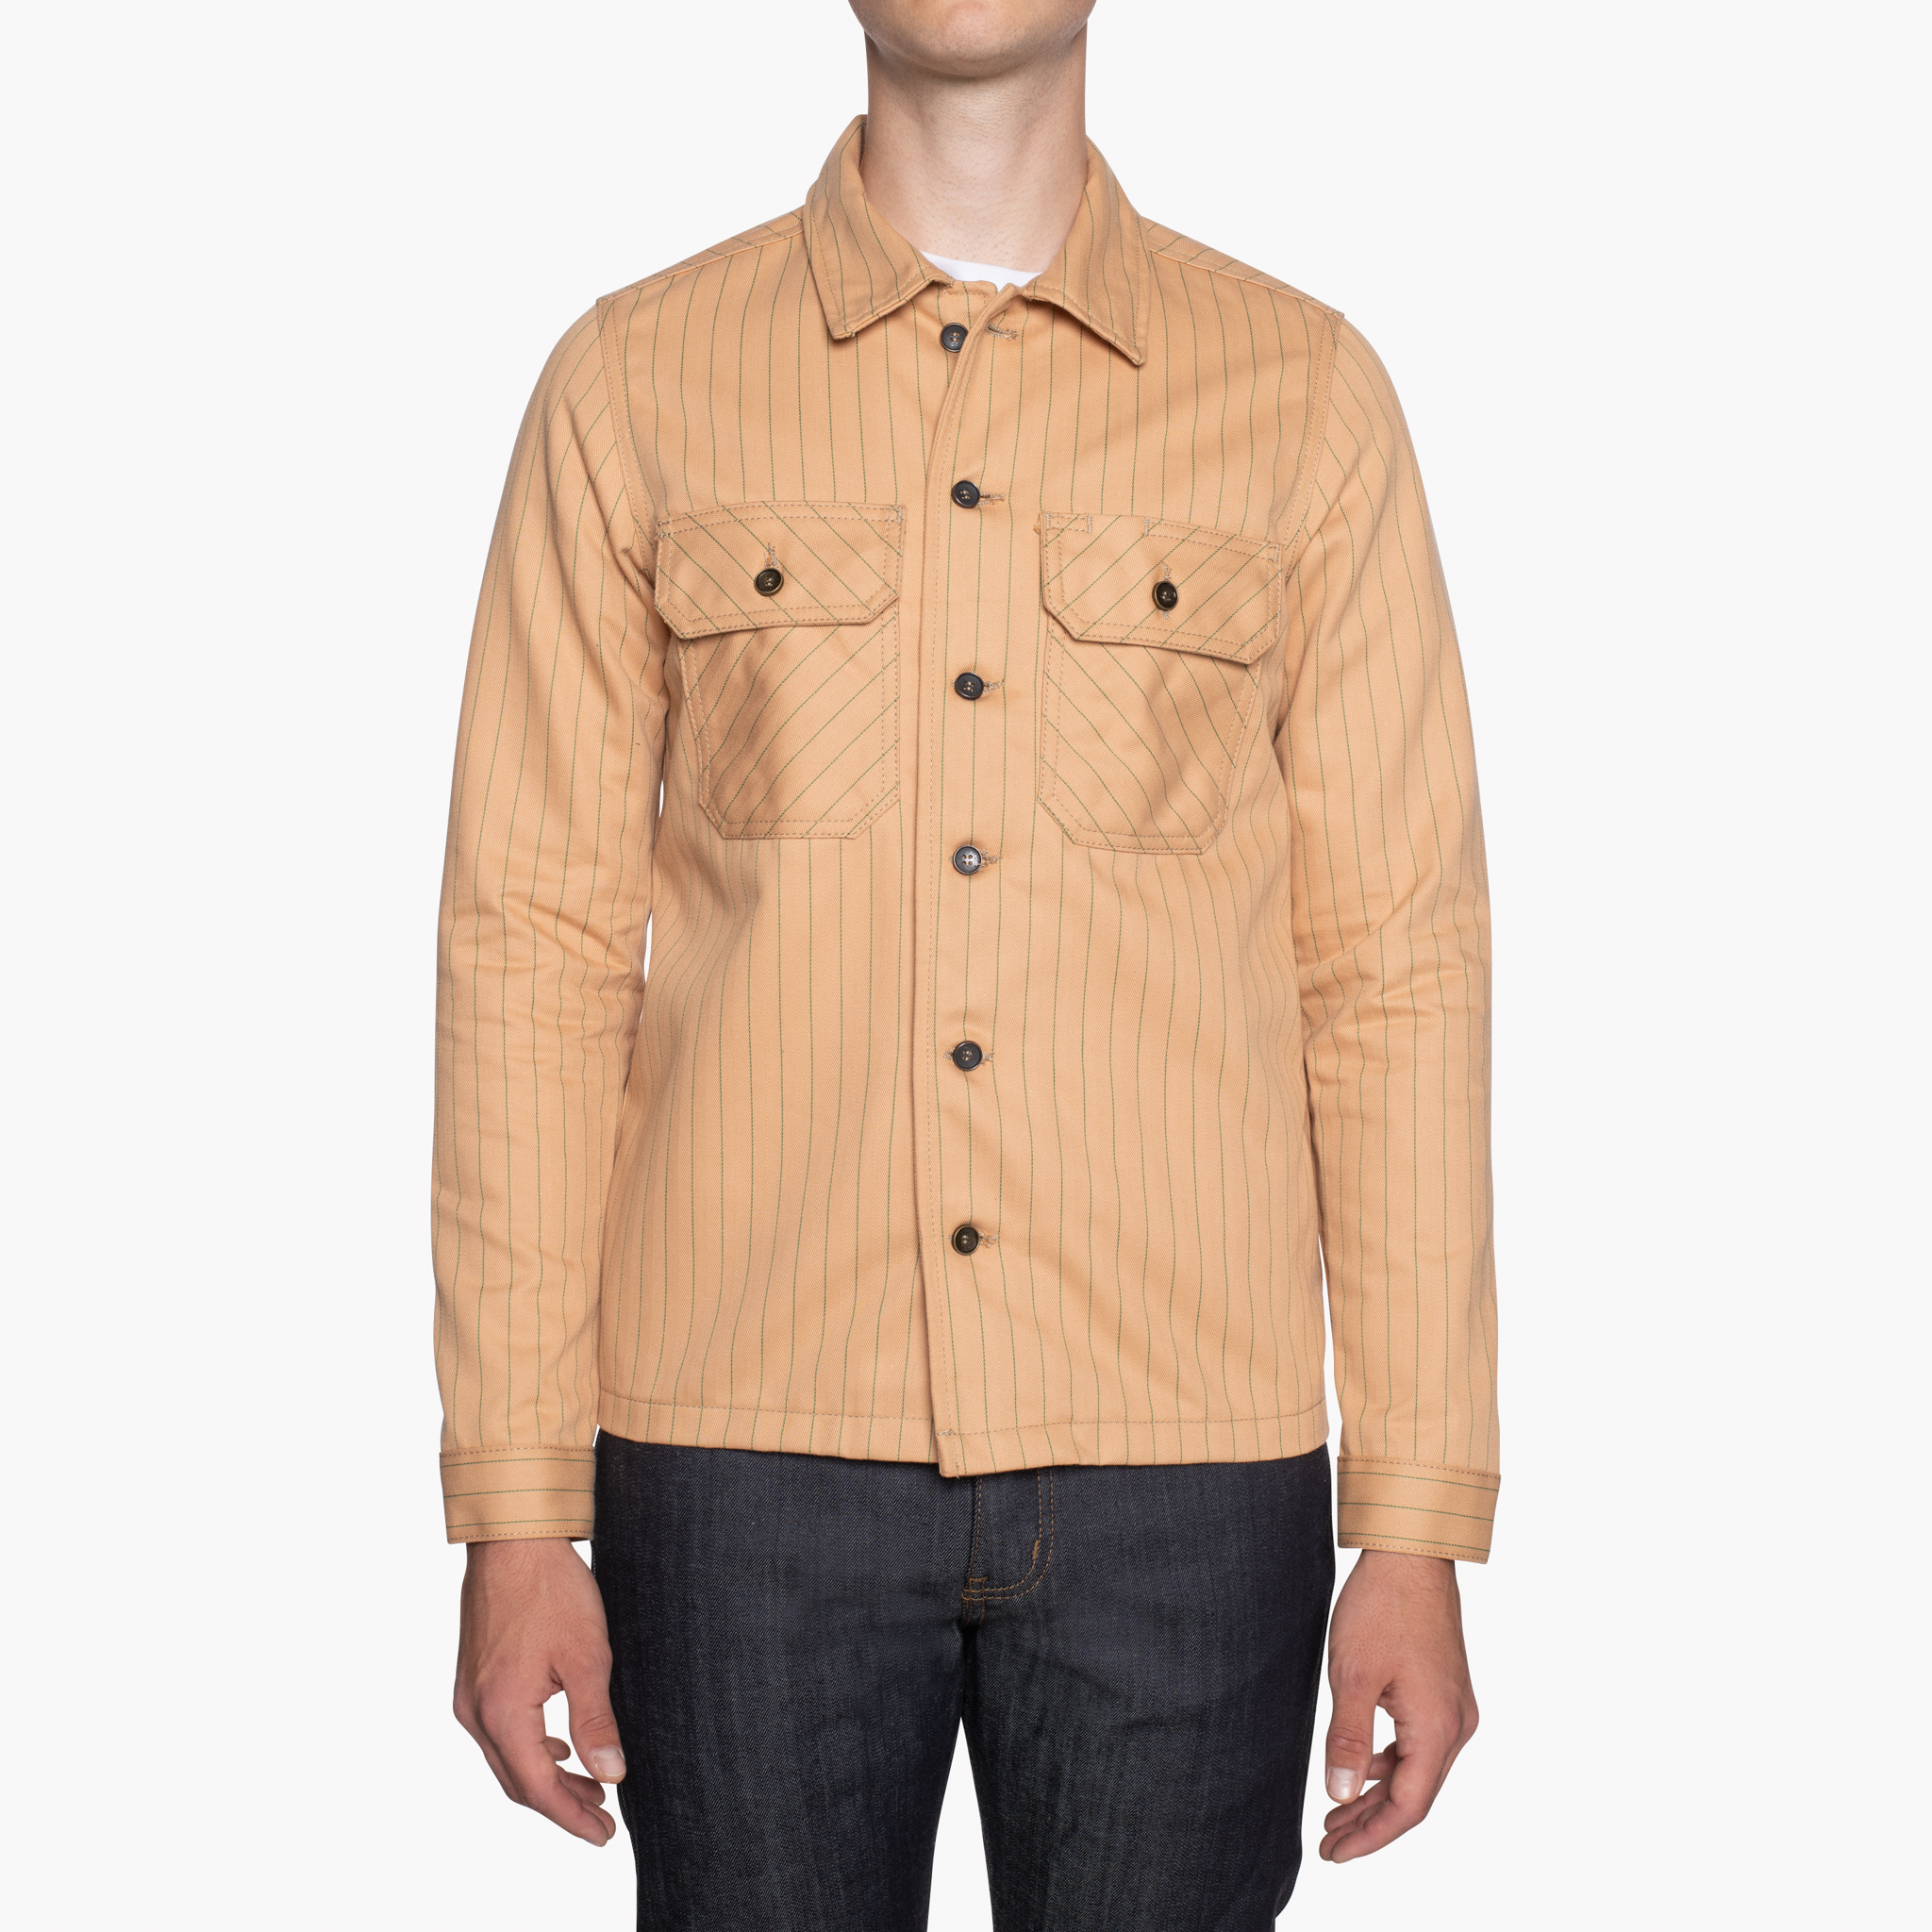  Work Shirt - Repro Workwear Twill - Peach - front 